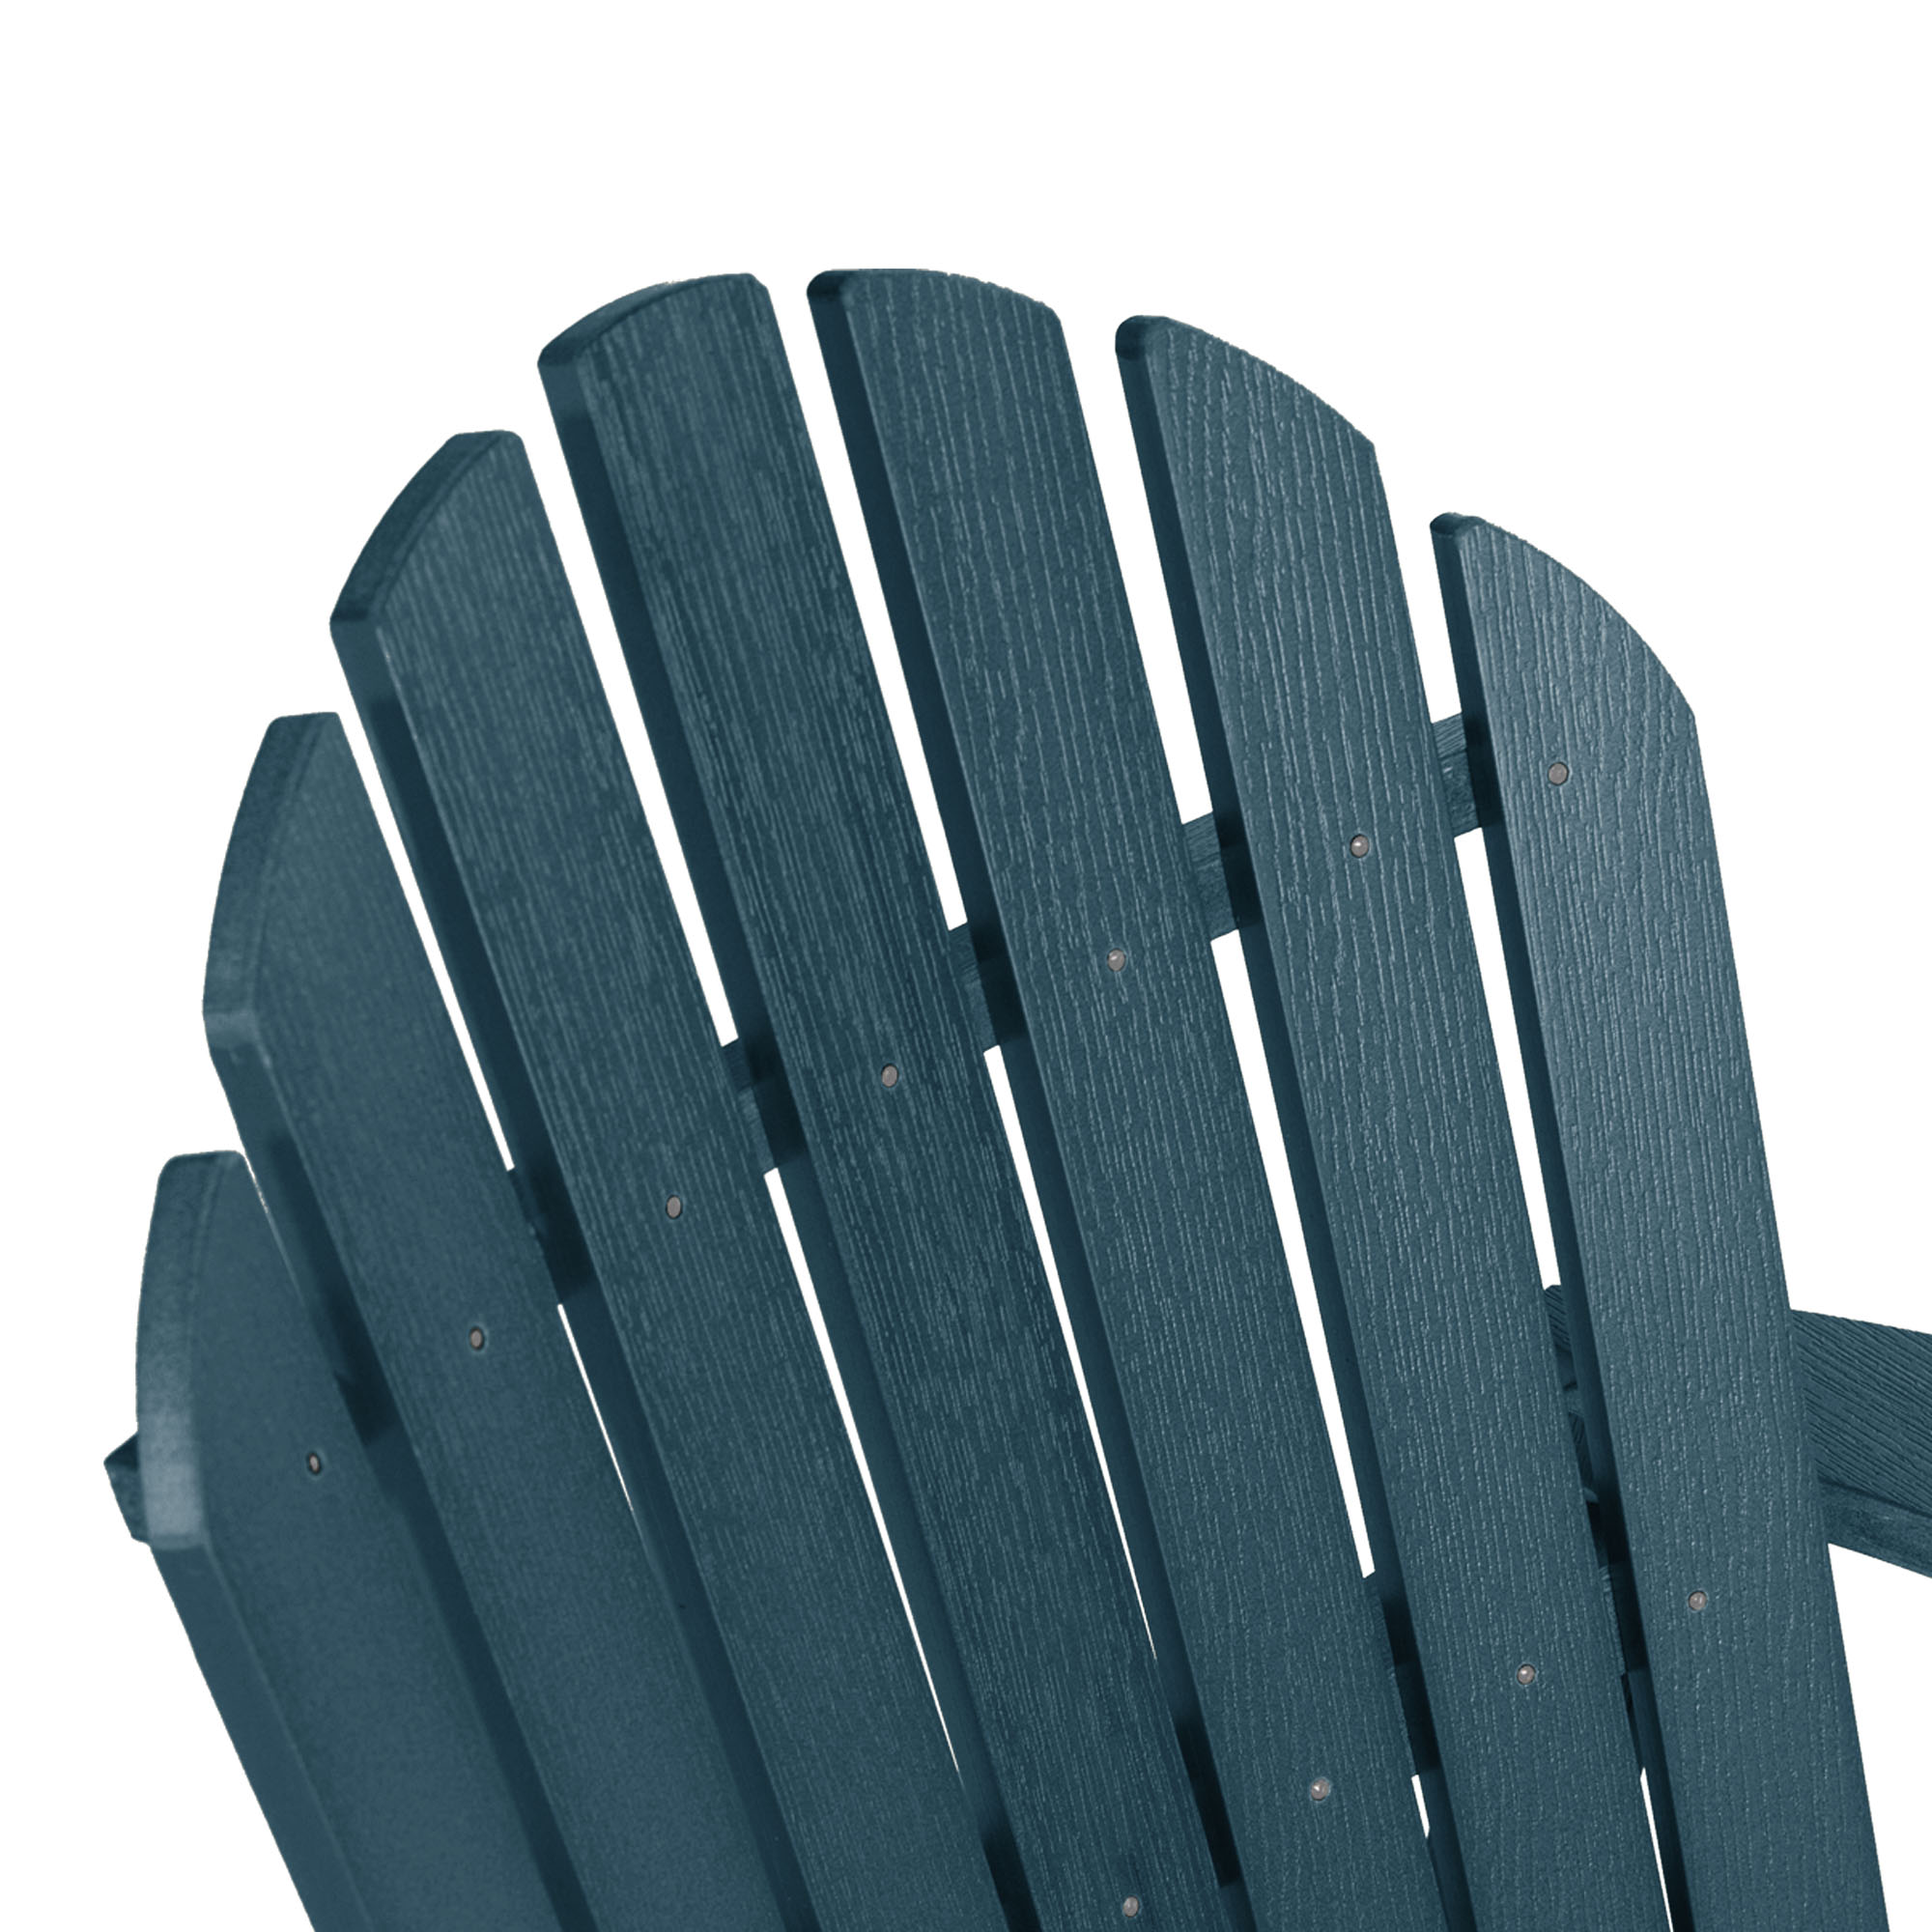 Highwood's Folding & Reclining King Hamilton Adirondack Chair - image 5 of 5